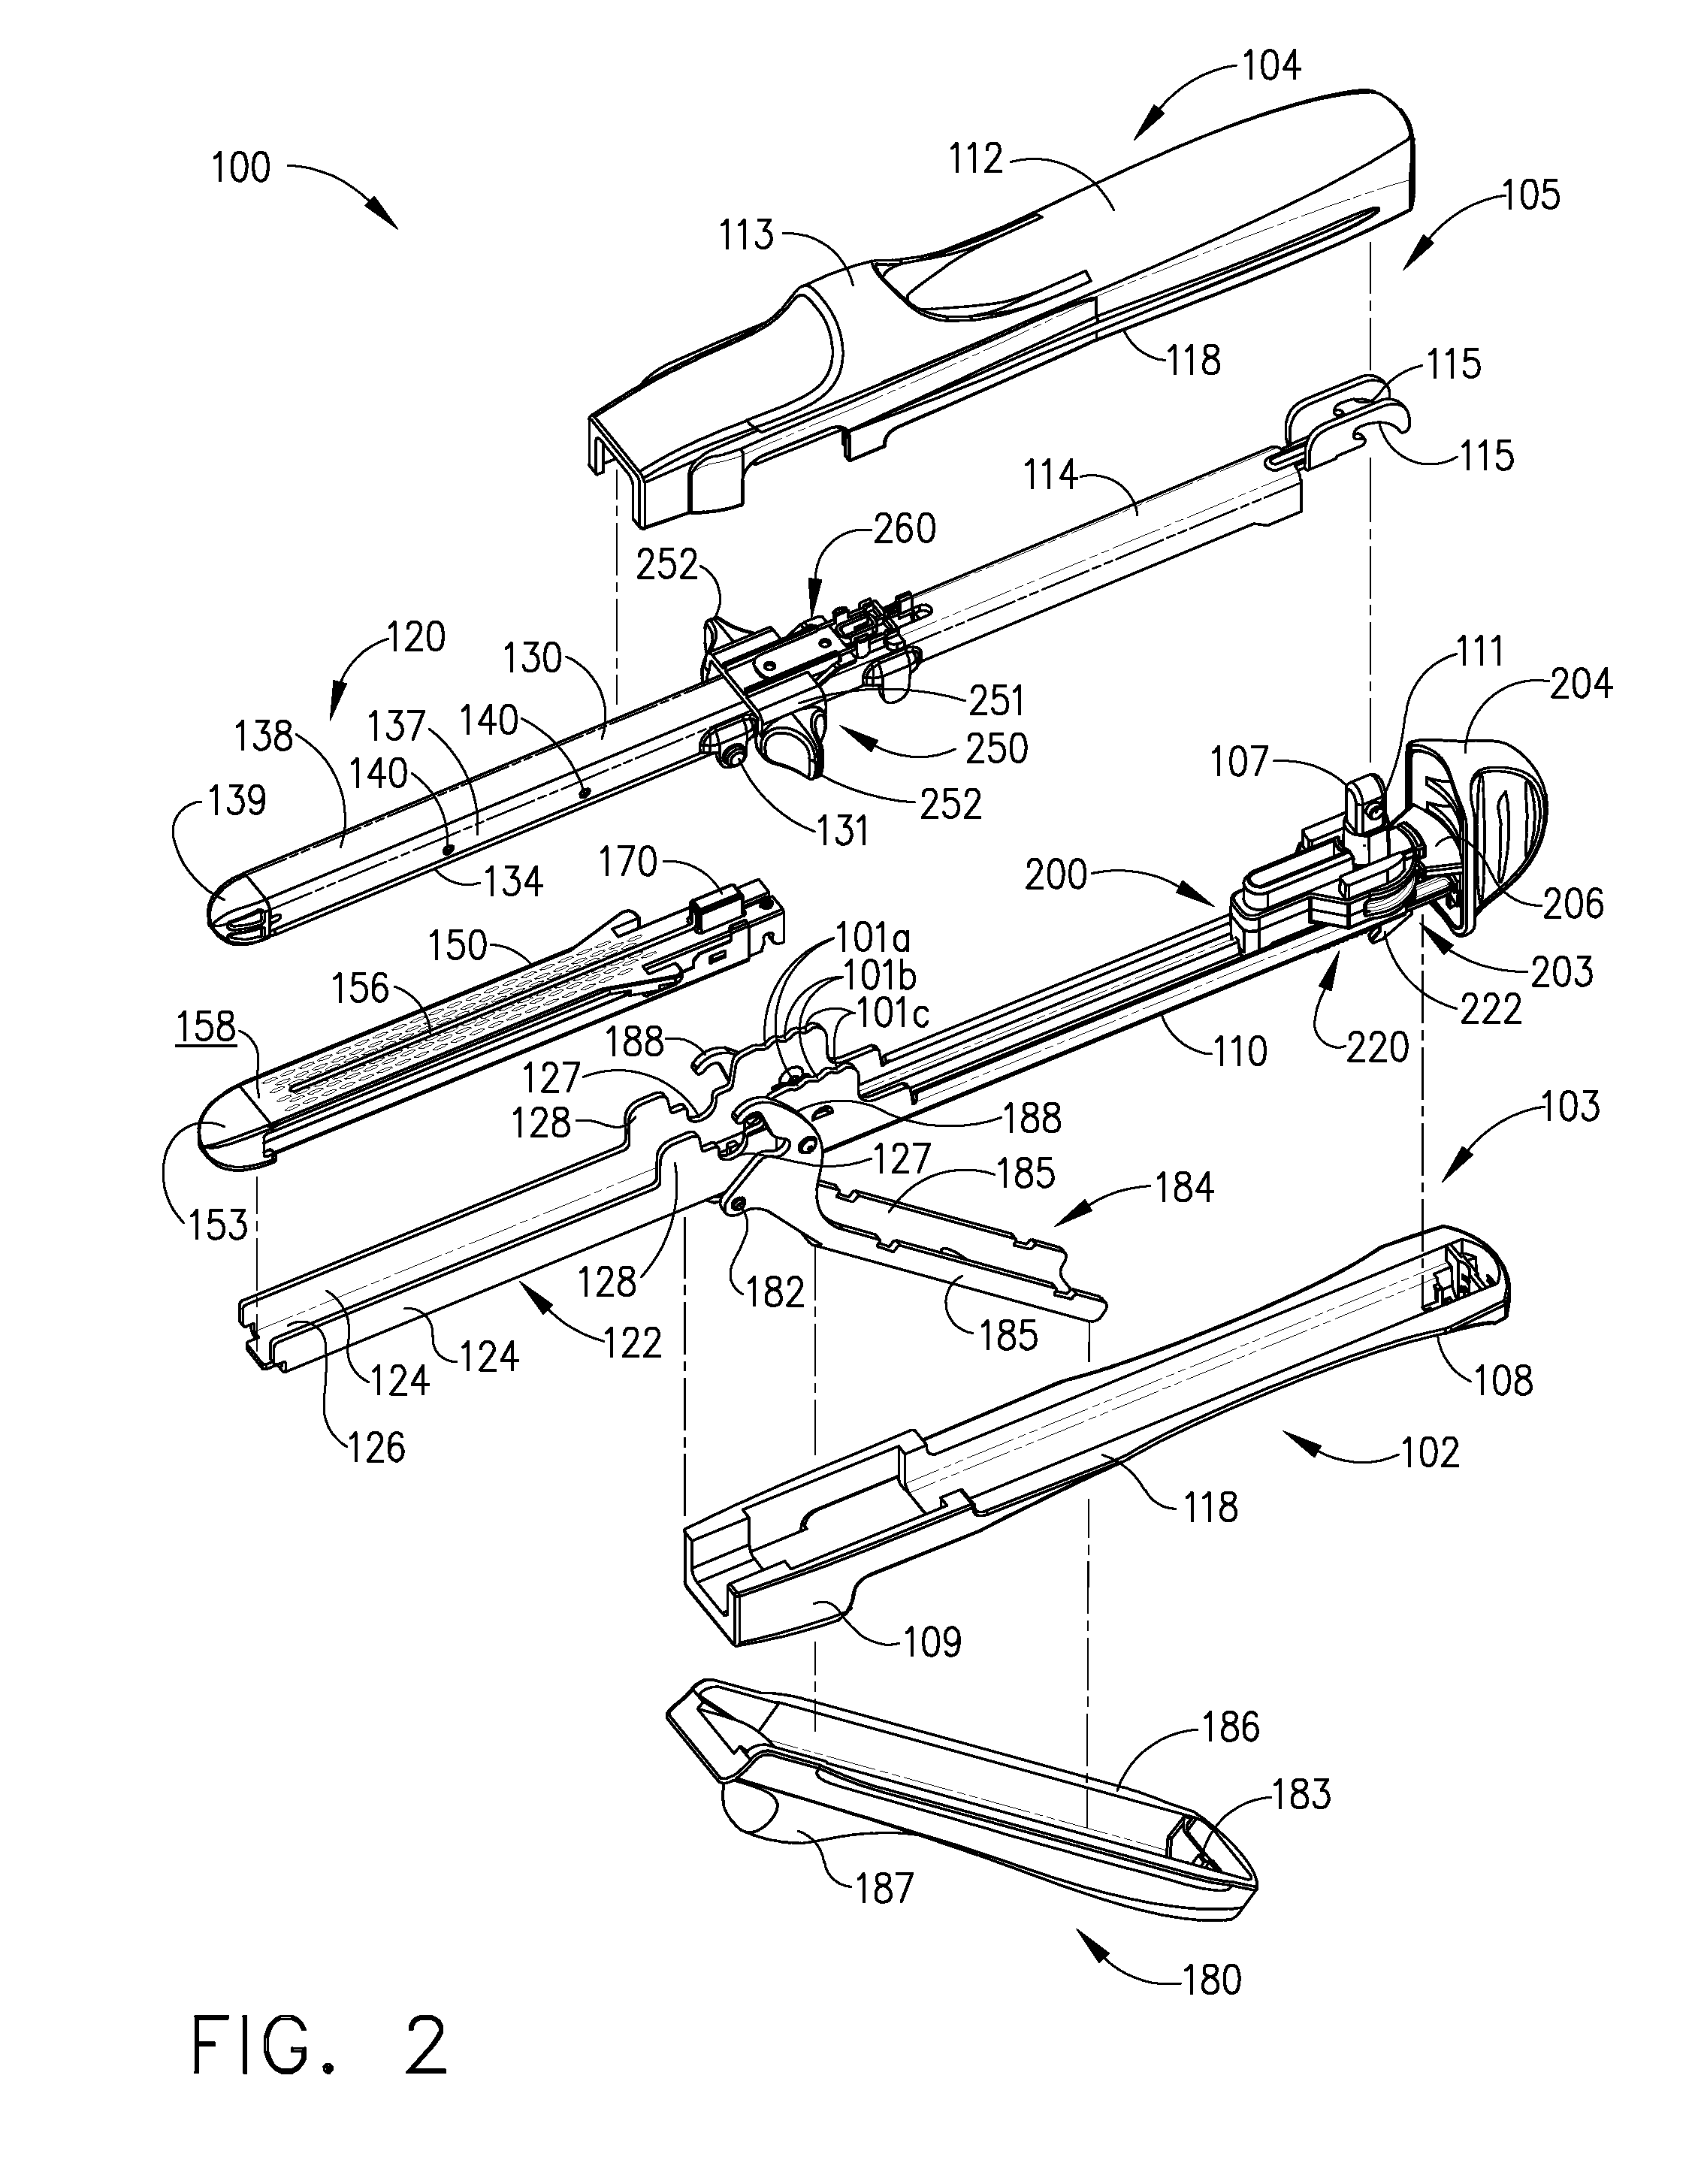 Lockout arrangement for a surgical stapler